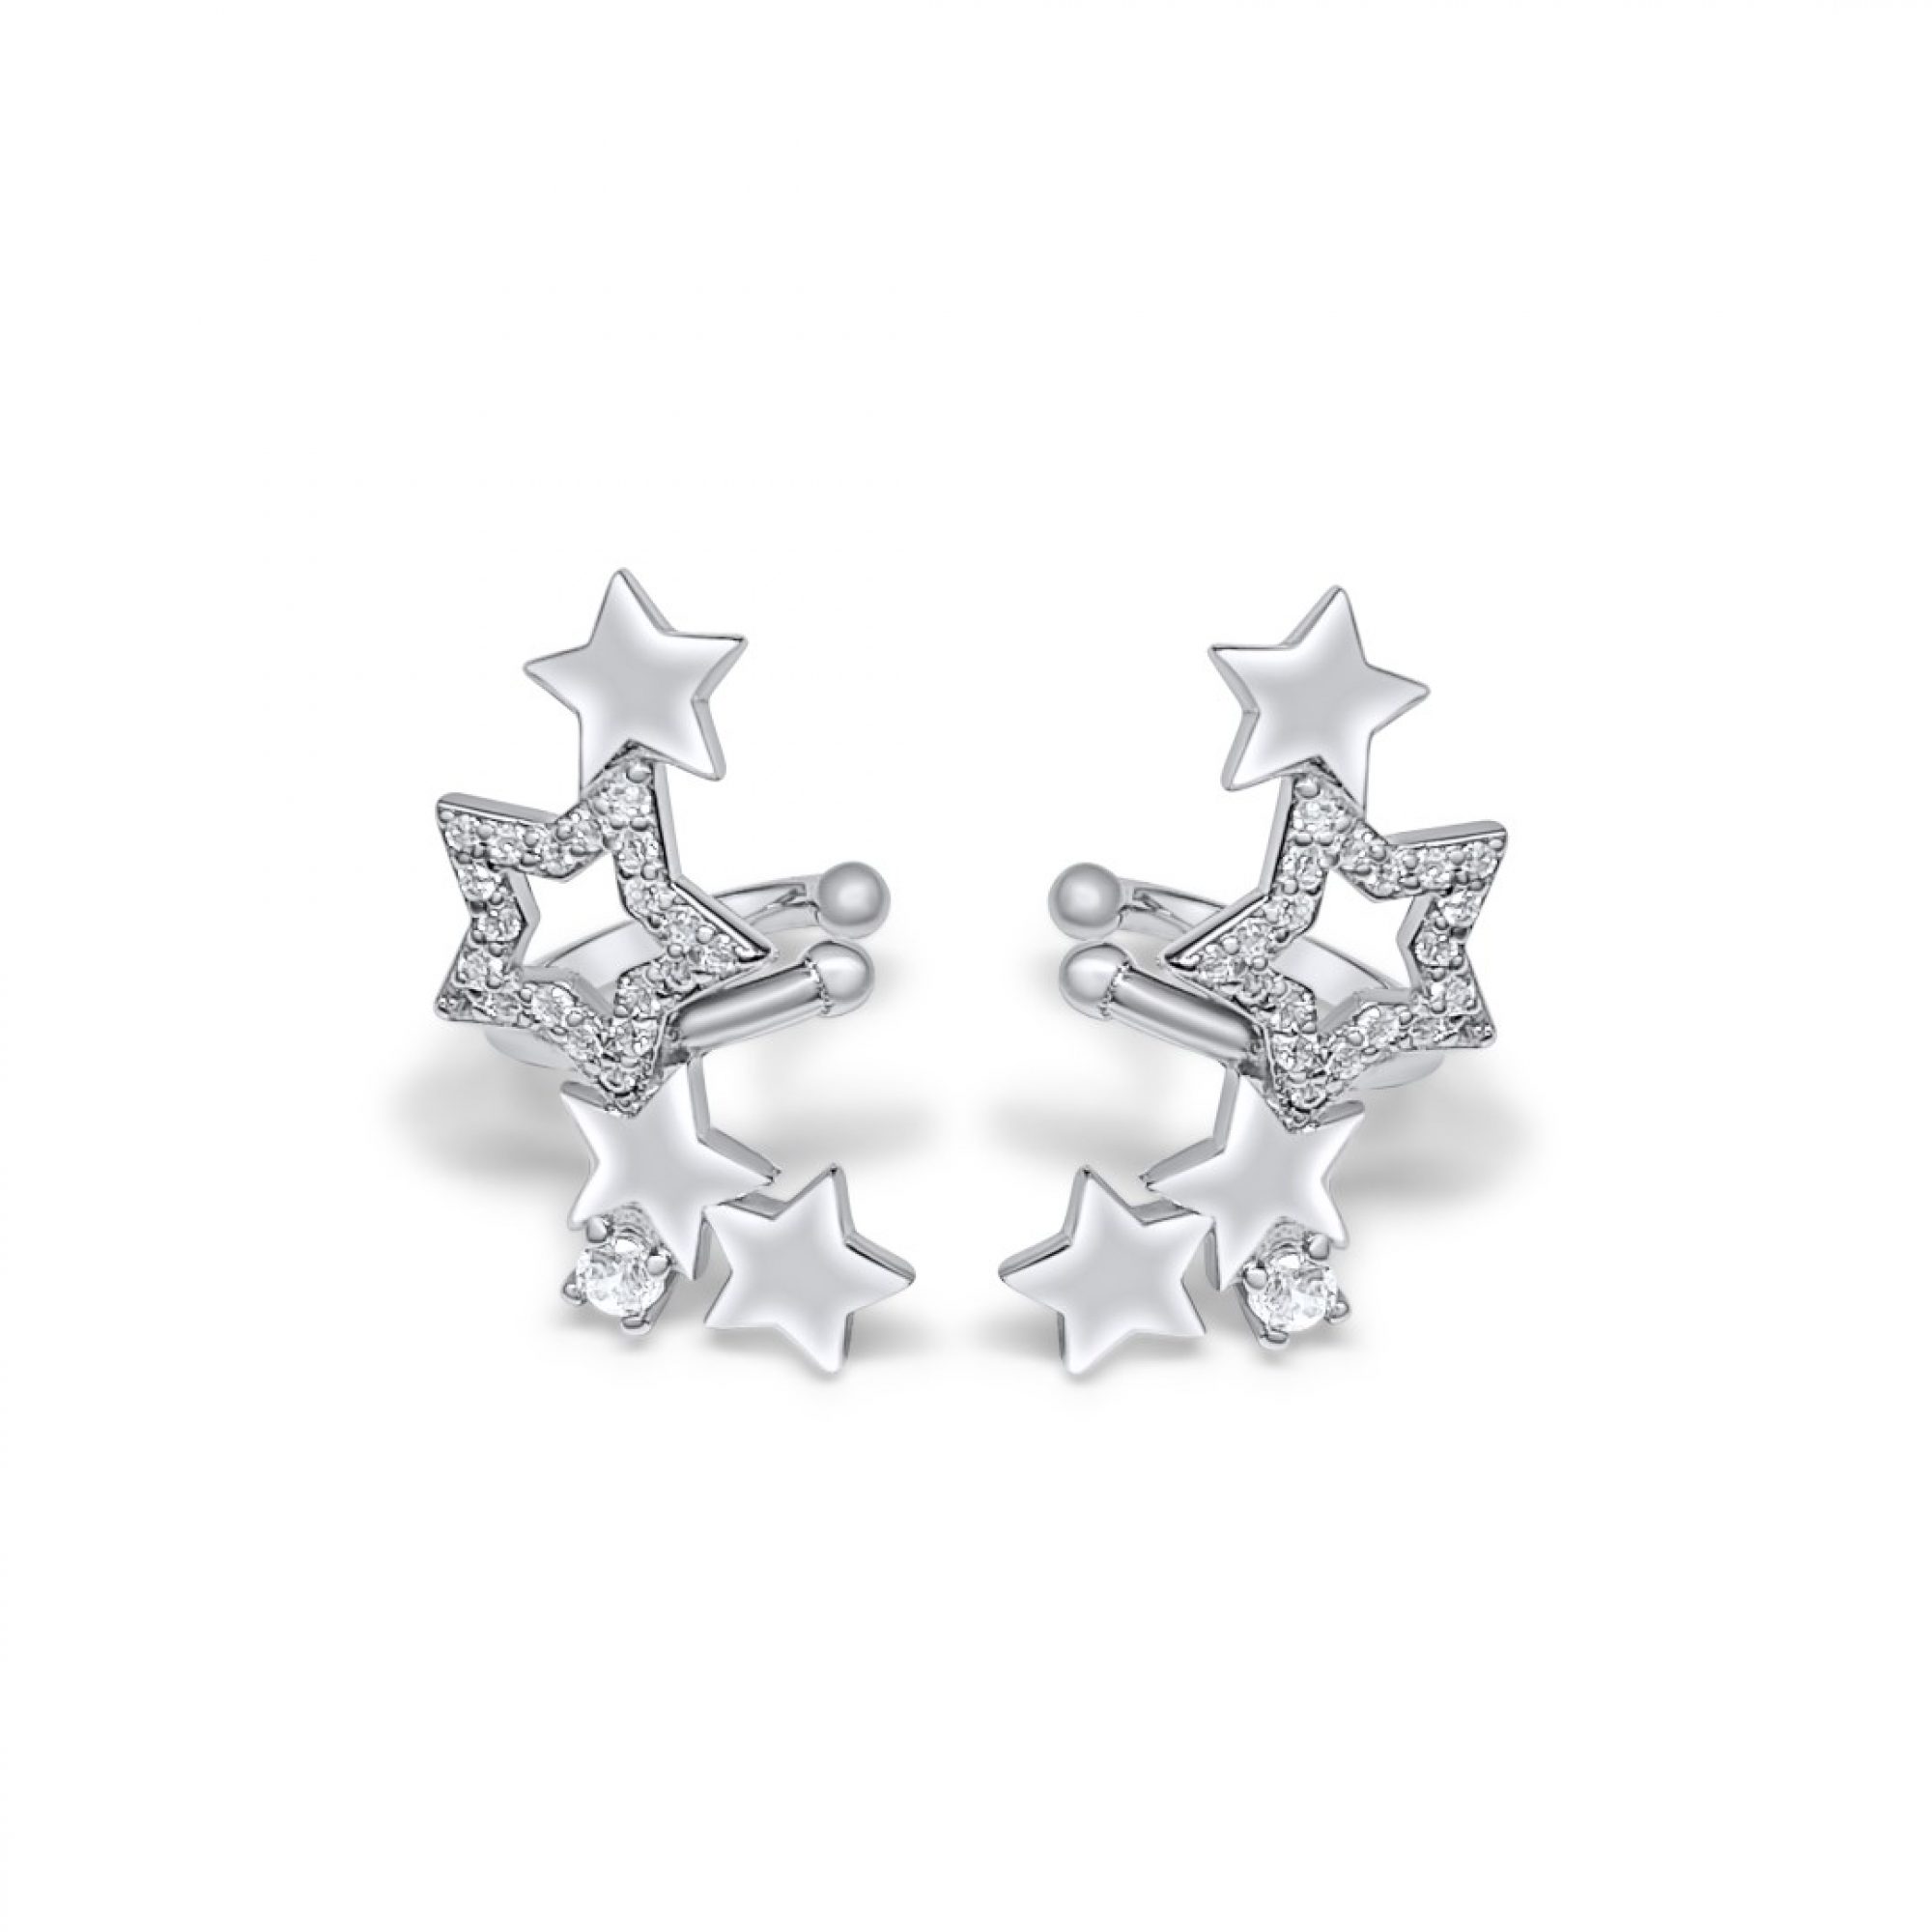 Silver star ear cuffs with zircon stones